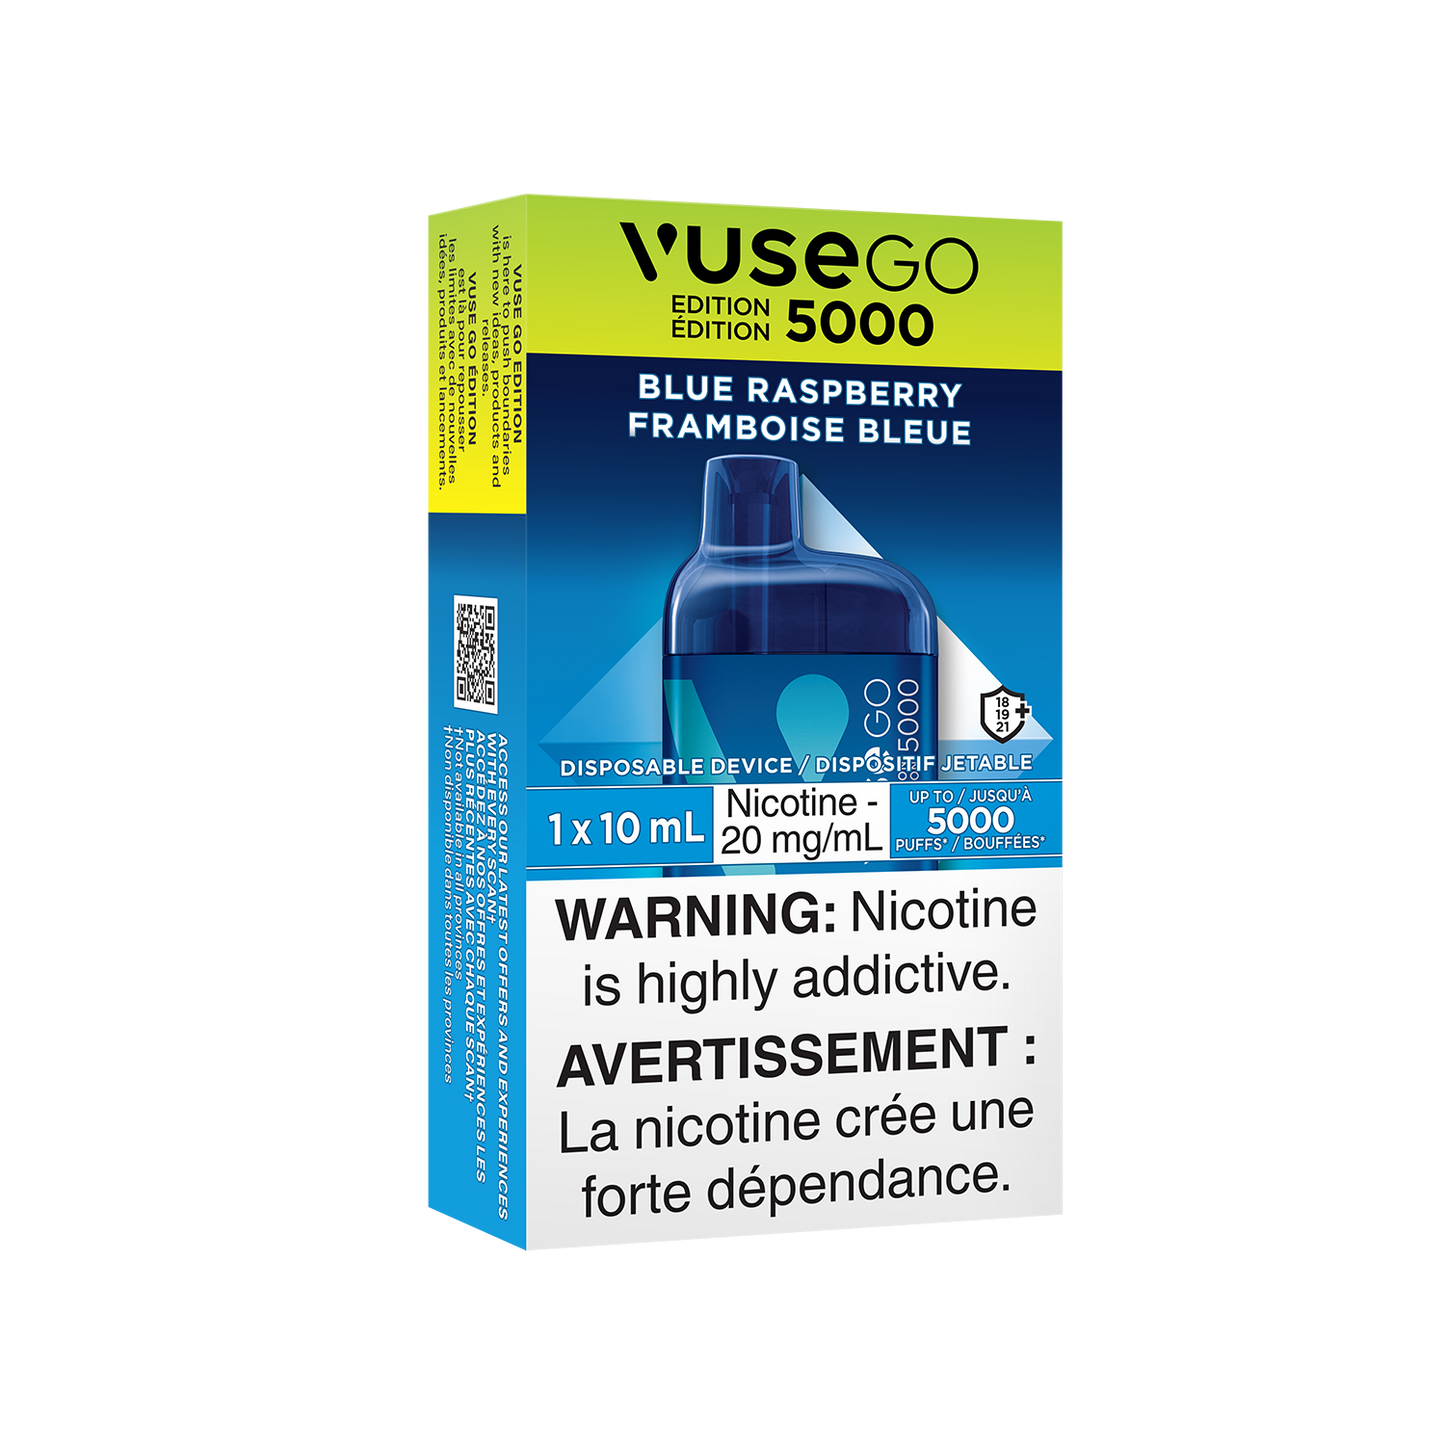 Vuse Go Edition 5000 Blue Raspberry